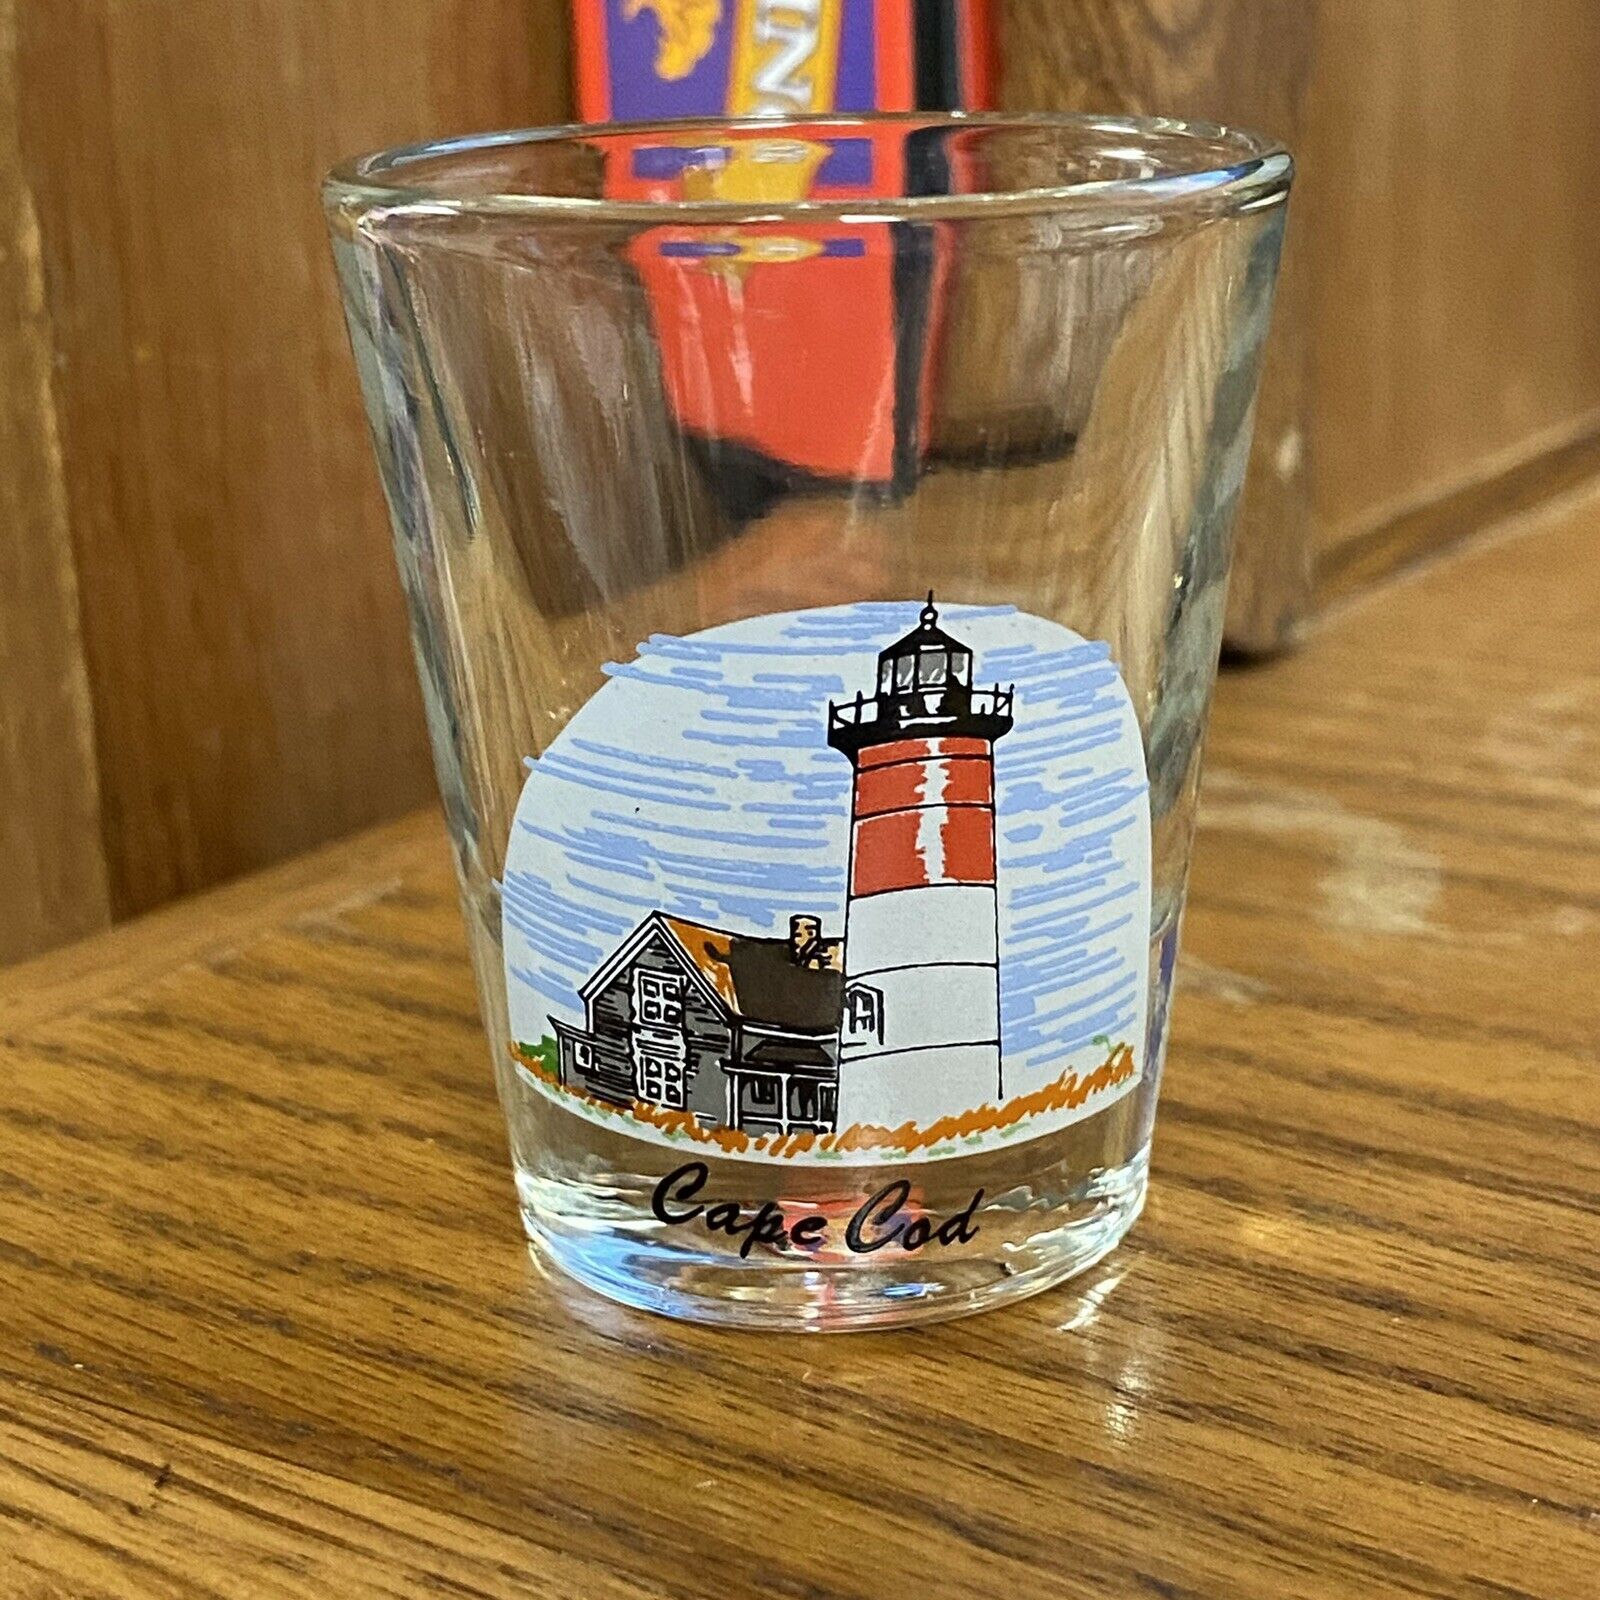 Lighthouse Cape Cod Anchor Hocking Shot Glass - $8.90